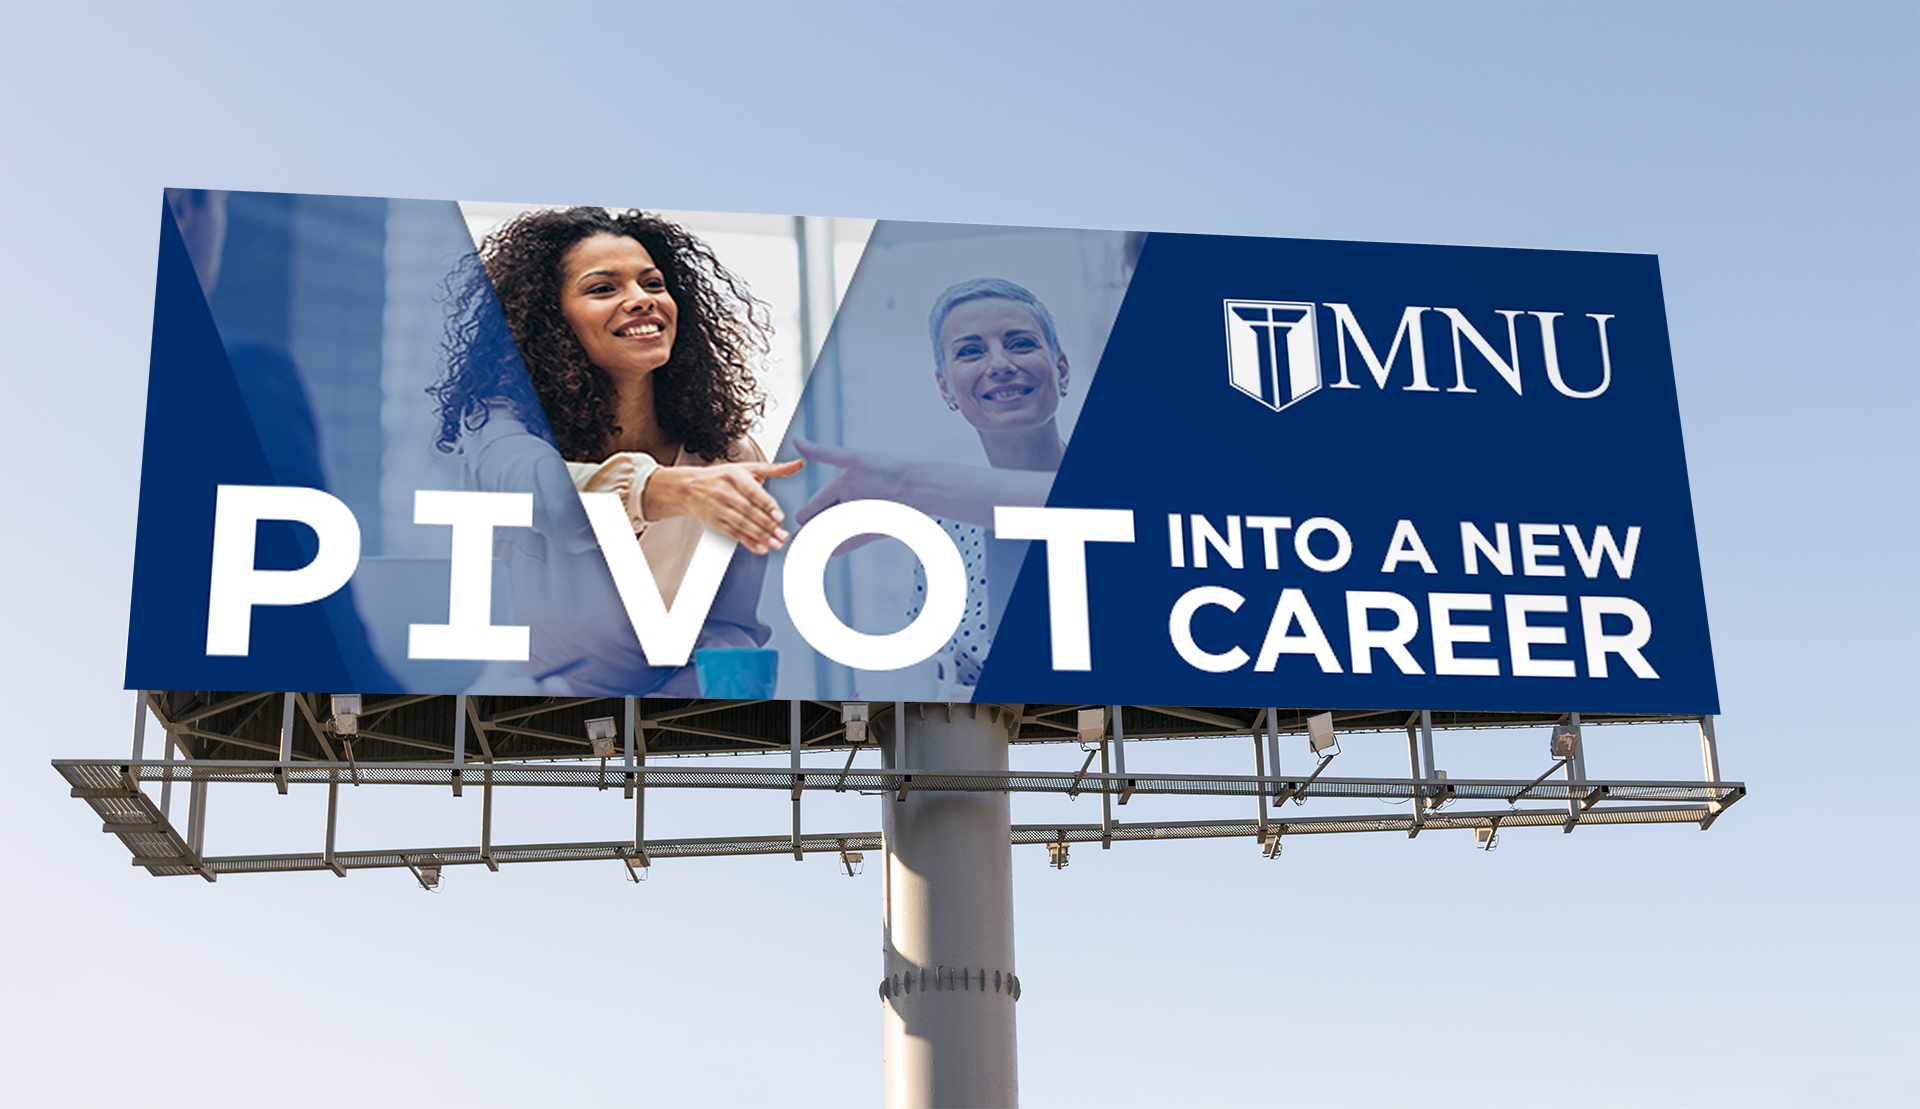 MNU - Pivot into a new career Billboard